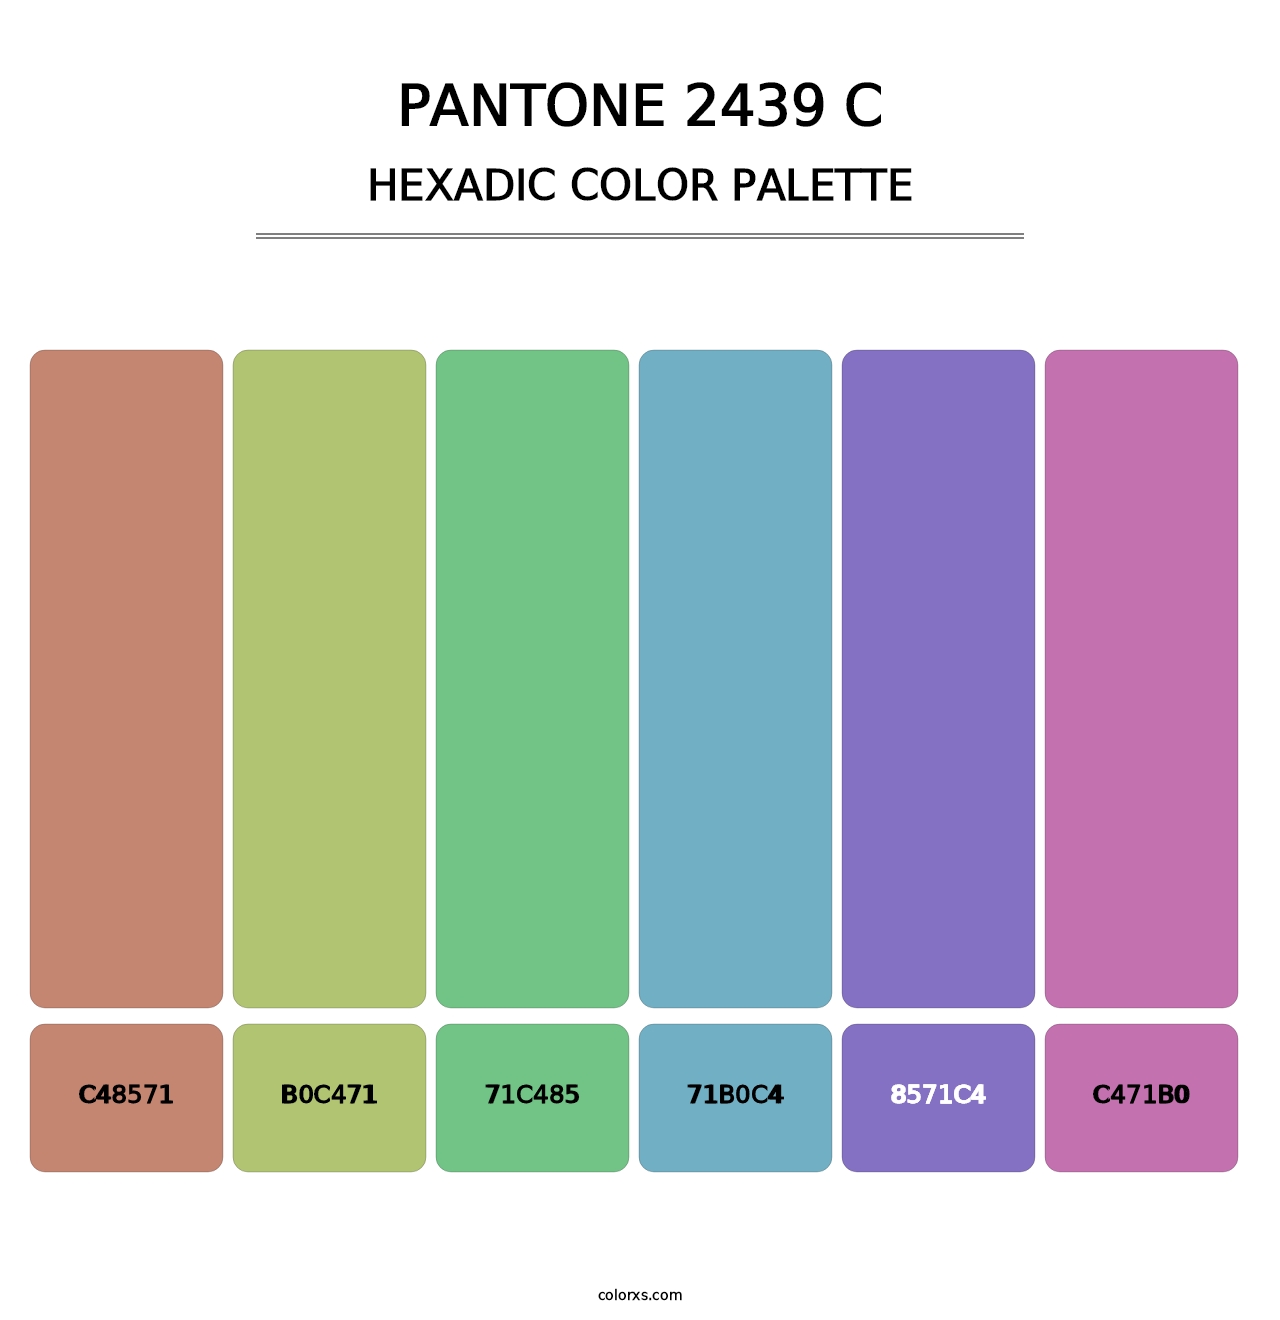 PANTONE 2439 C - Hexadic Color Palette